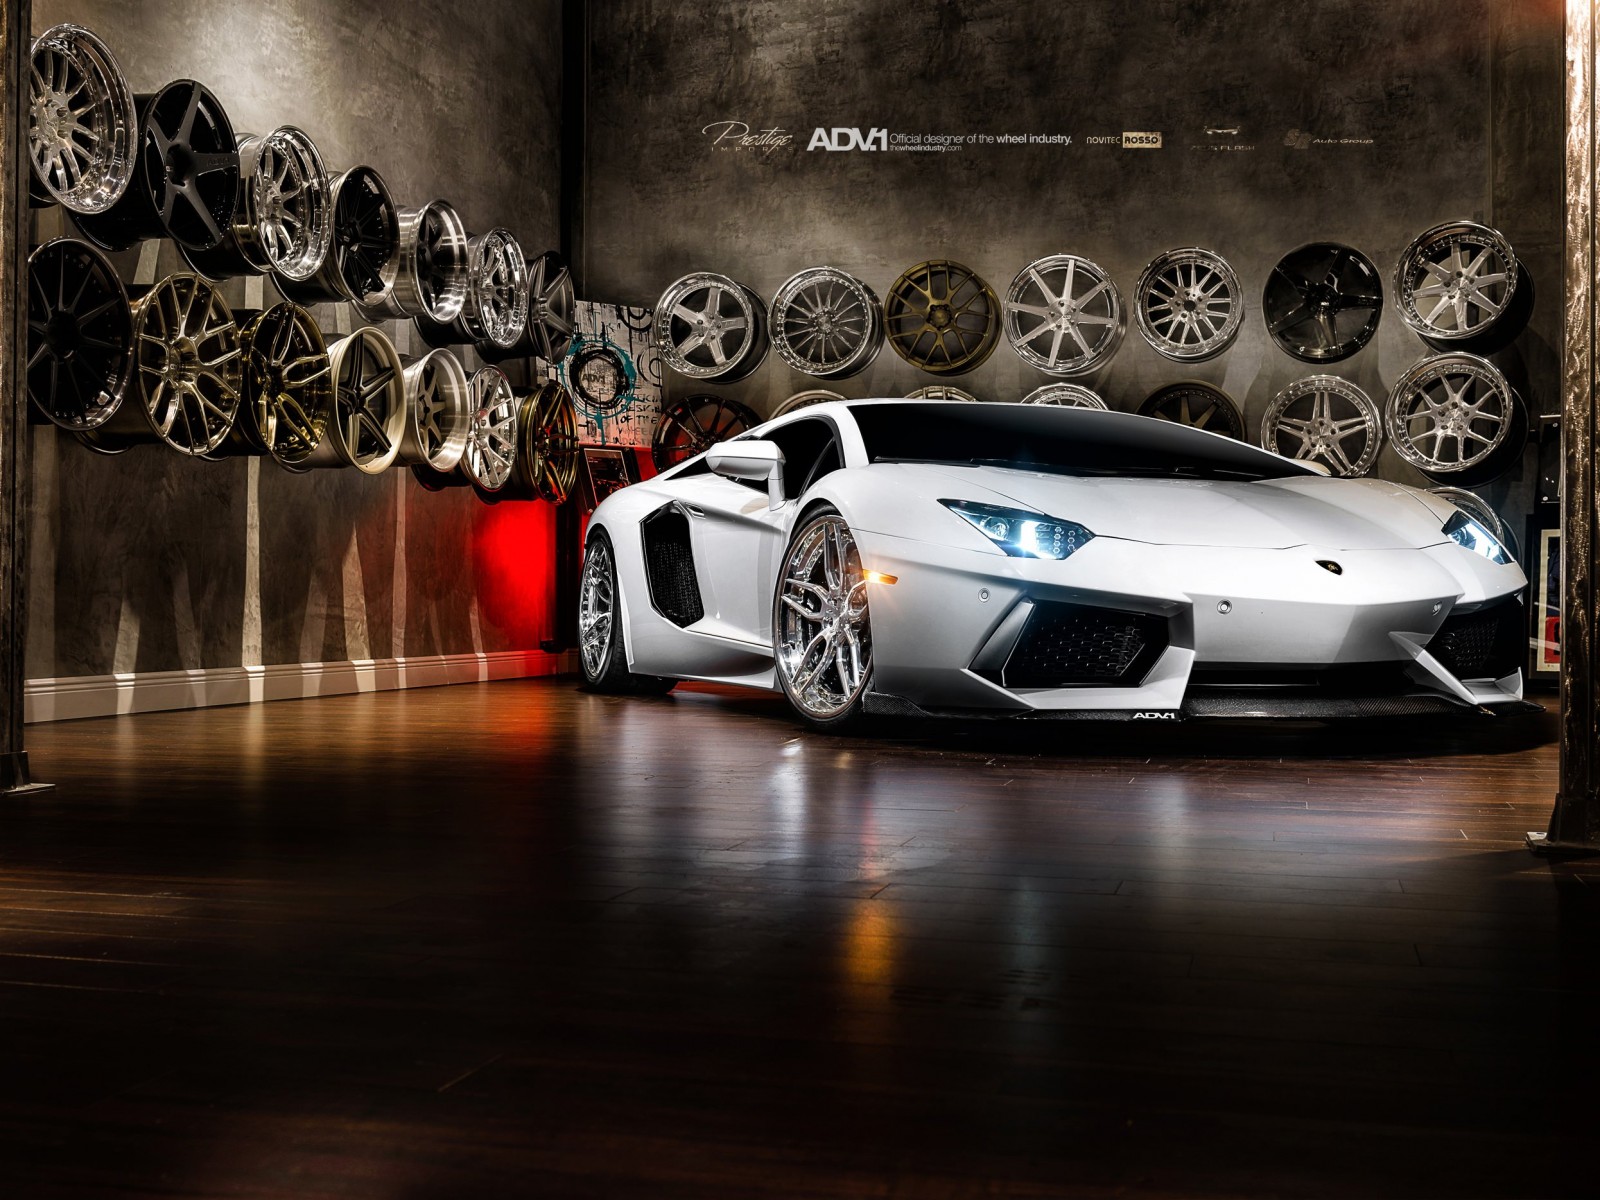 Lamborghini Aventador On ADV.1 Wheels Wallpaper for Desktop 1600x1200